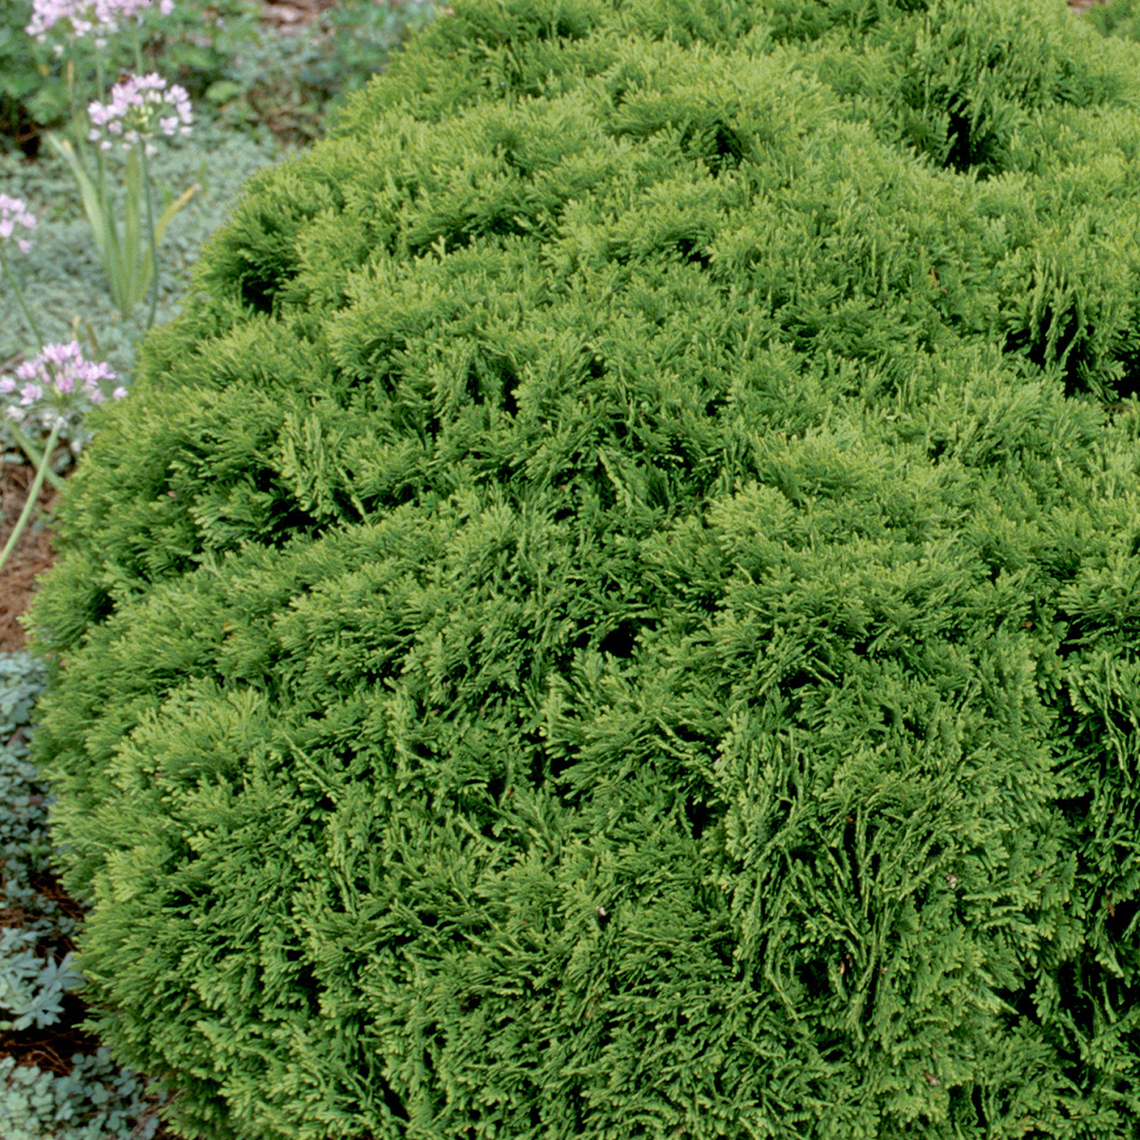 Danica a dwarf evergreen arborvitae with bright green scale like foliage